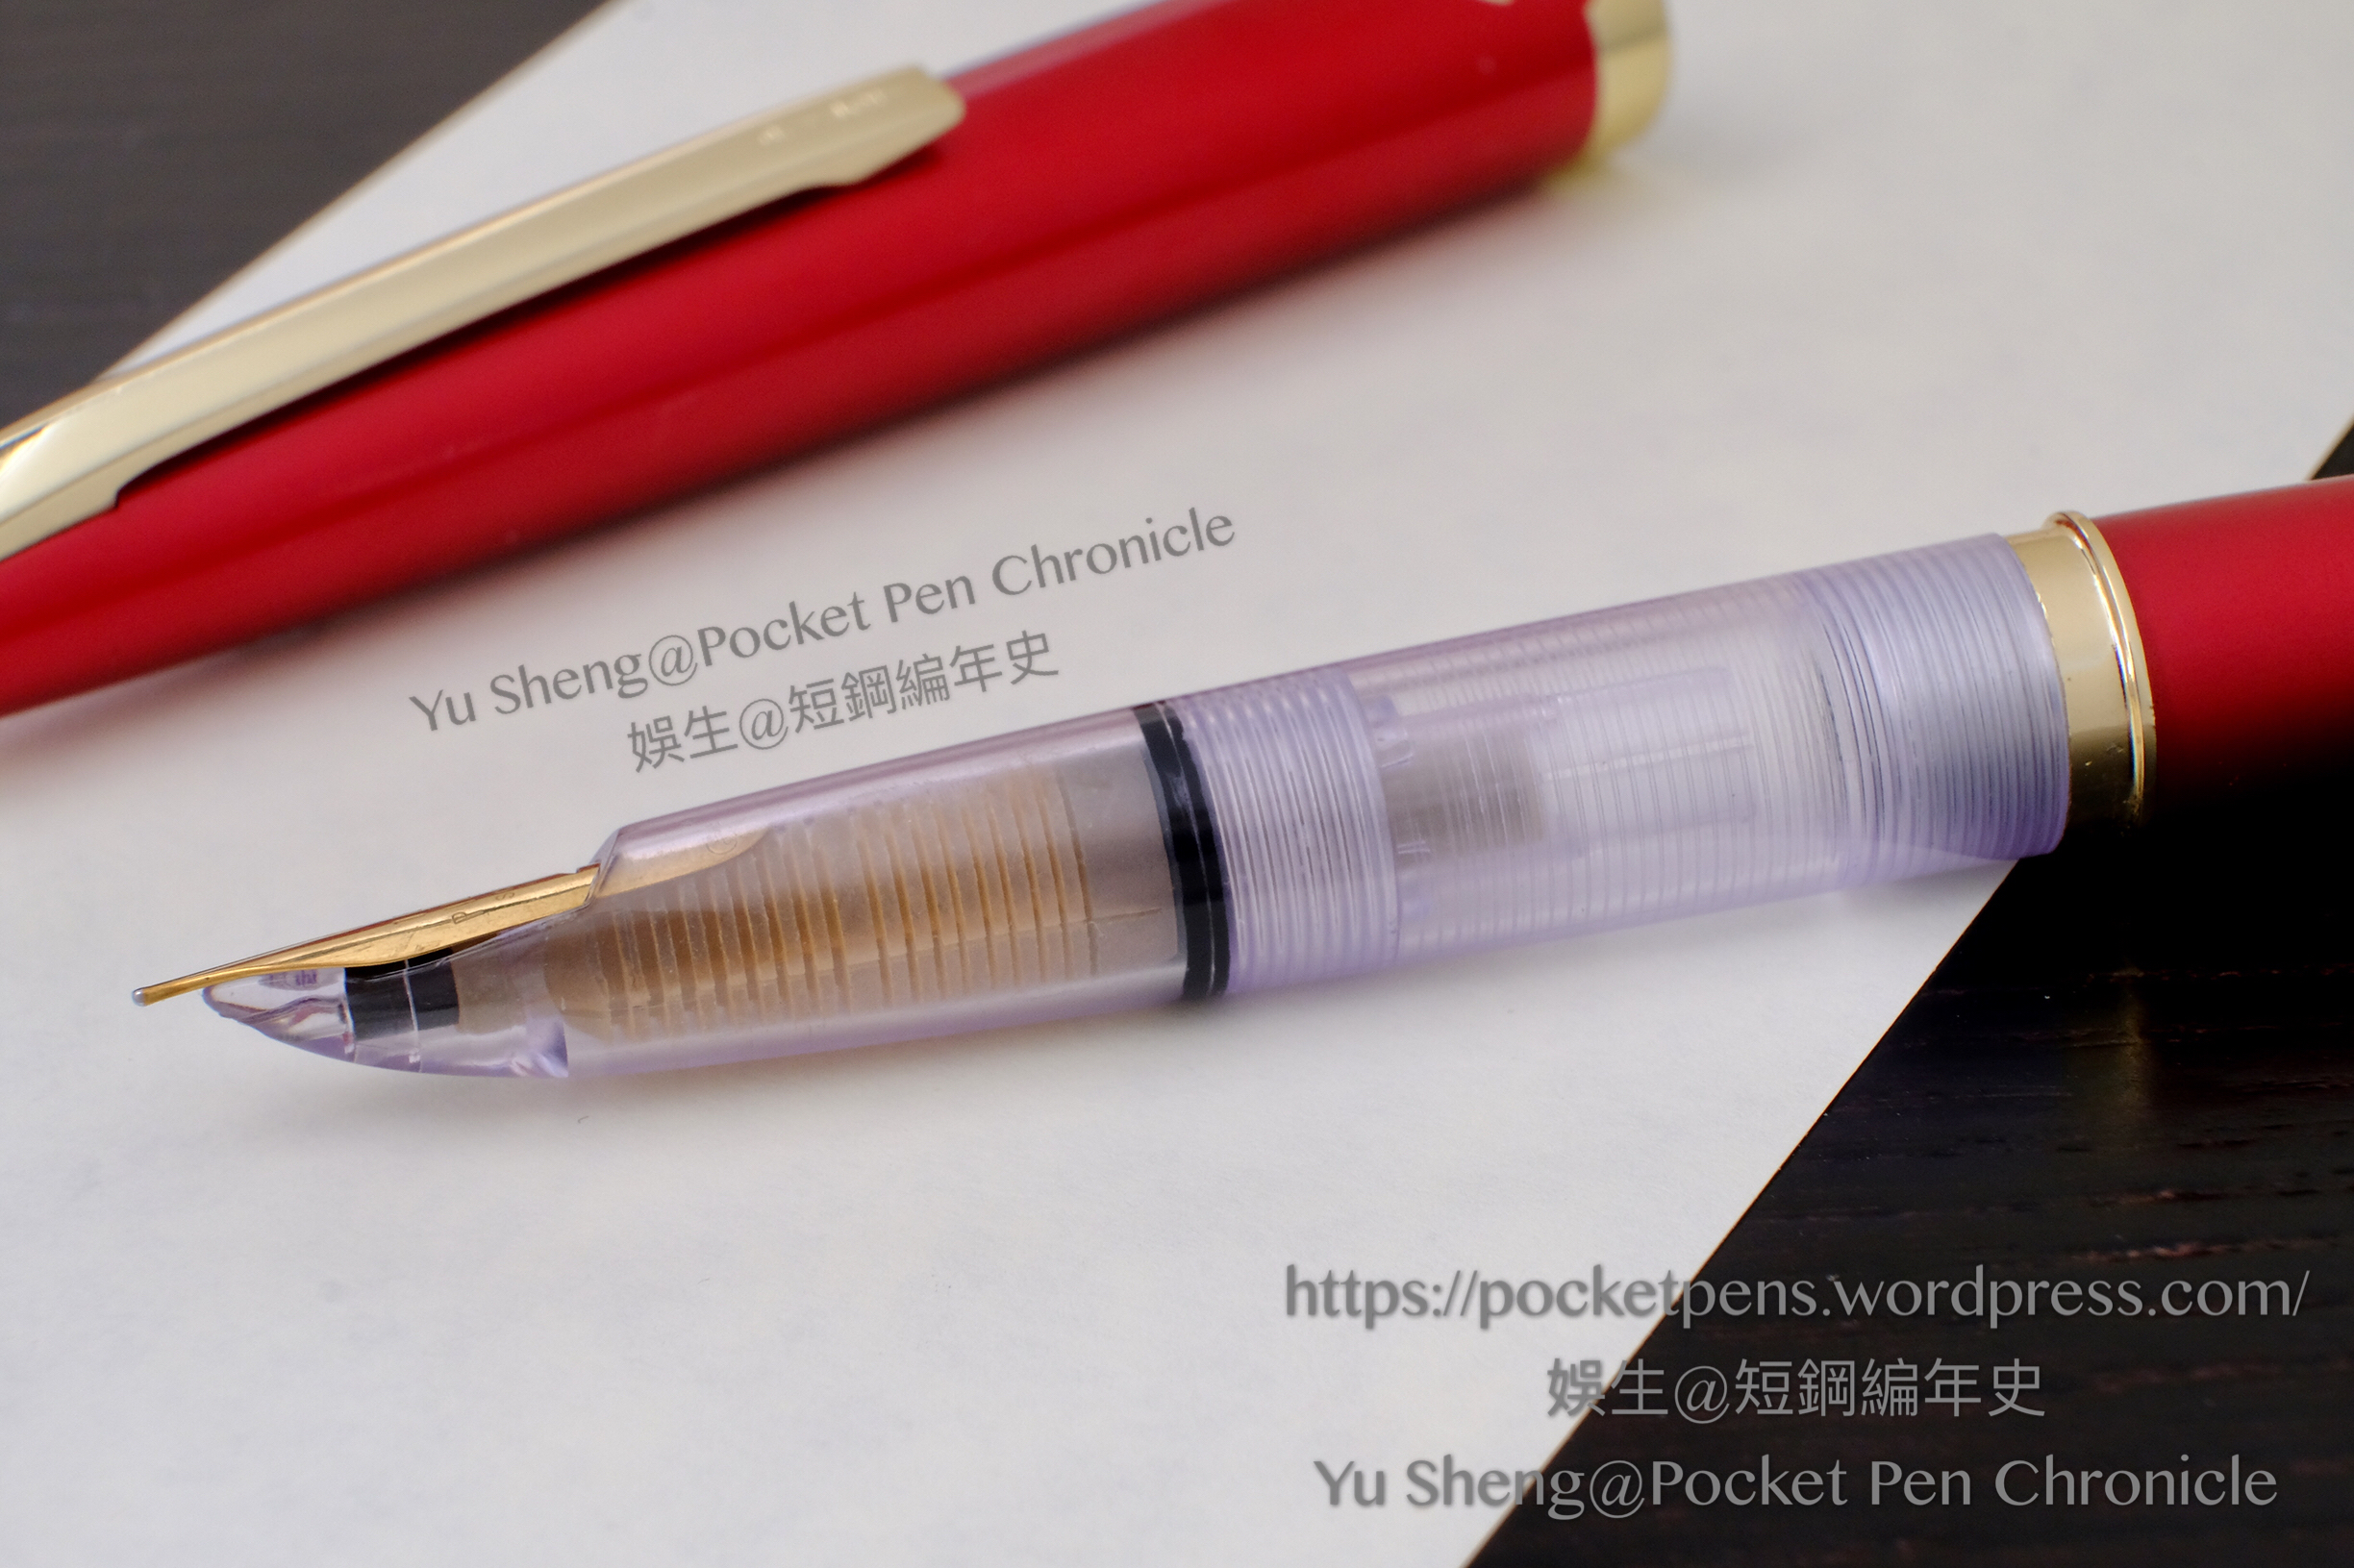 Red Elite S-KaraKara pocket pen, transparent section, 18k-gold nib